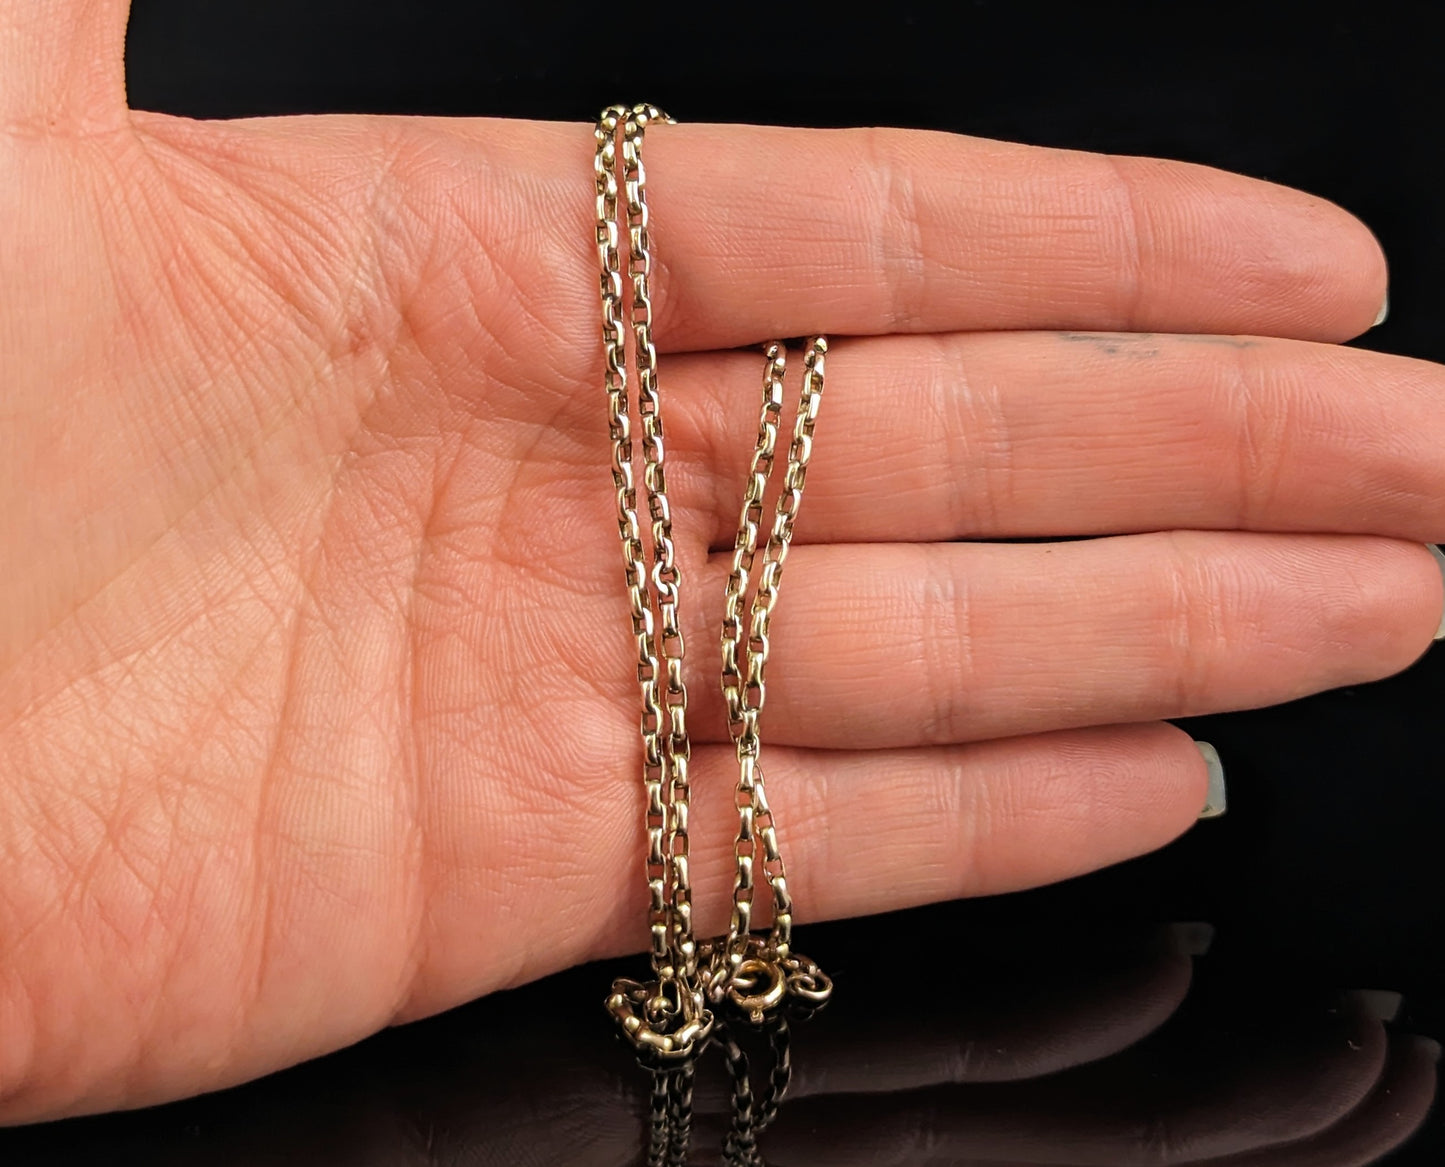 Antique 9ct gold belcher link chain necklace